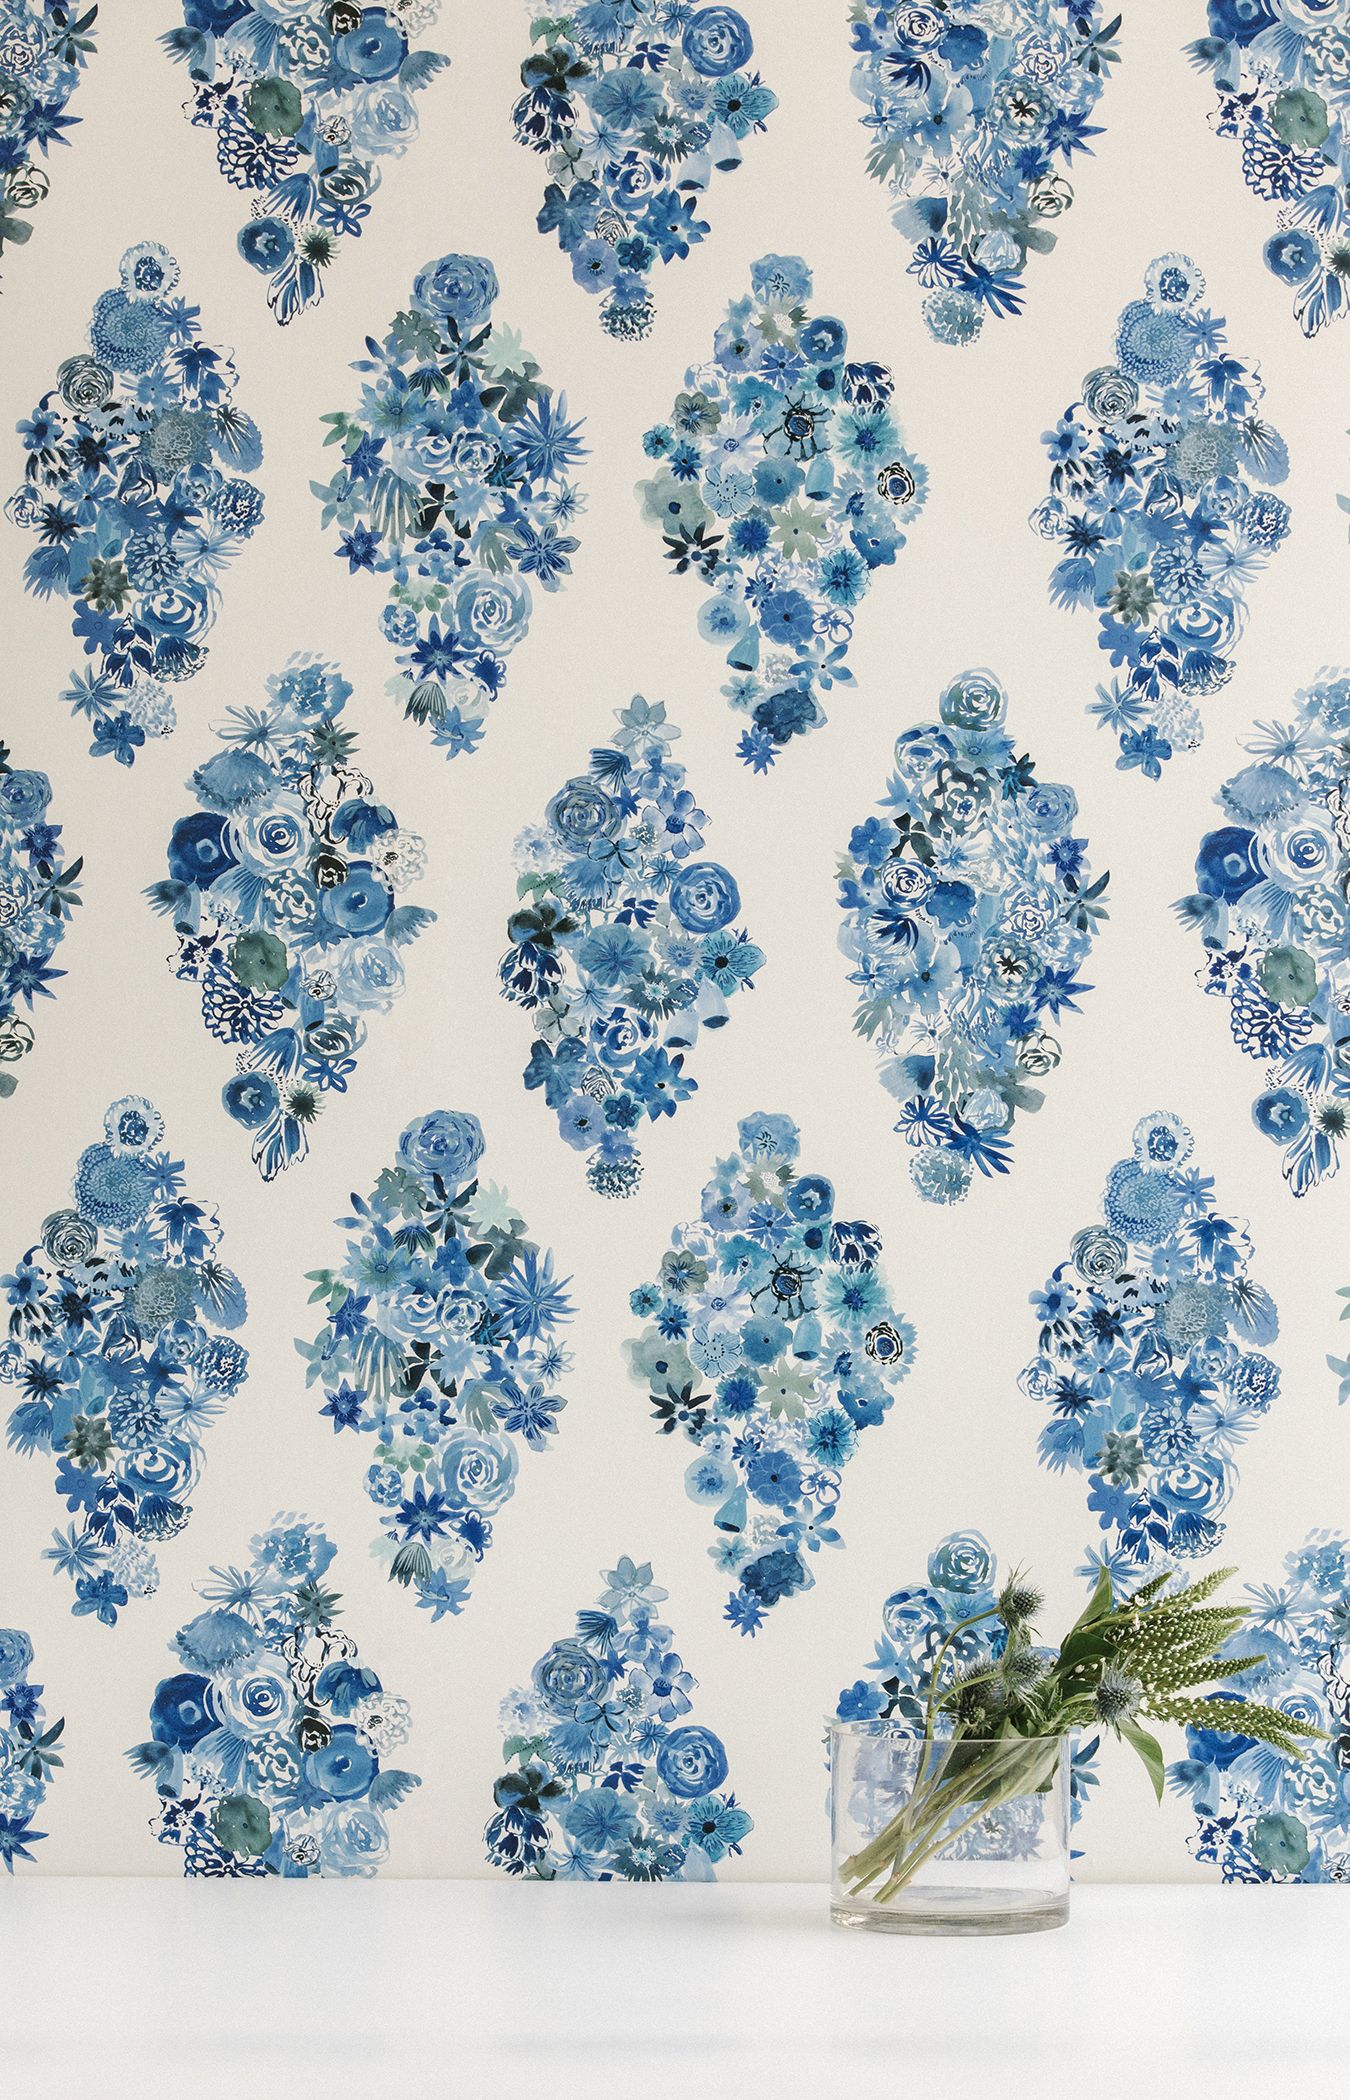 Self Adhesive Wallpaper in Designer Floral Strands  WallMantra